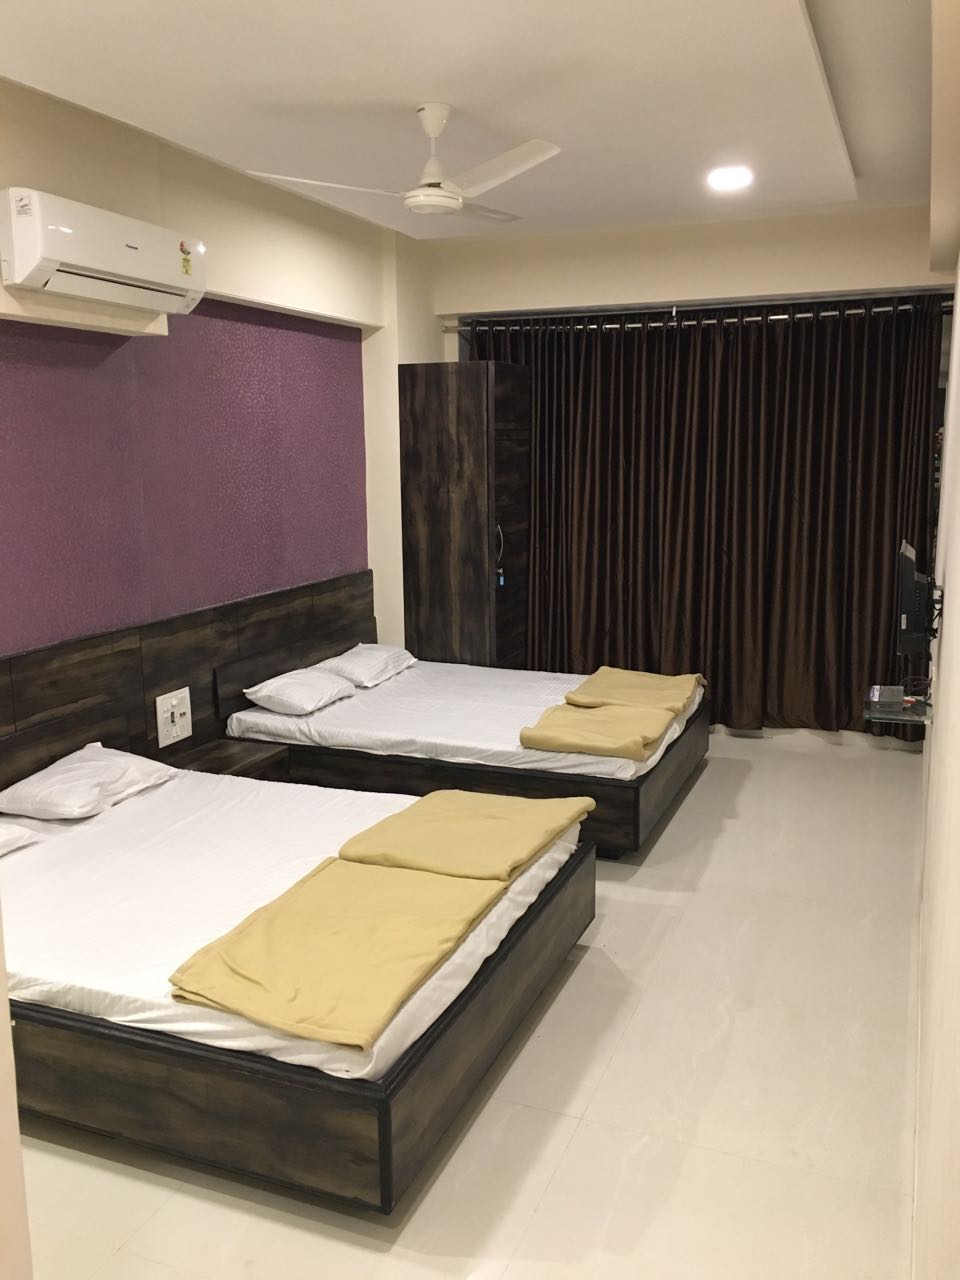 Deluxe Rooms Stay In A Best Hotel In Surat - Surat